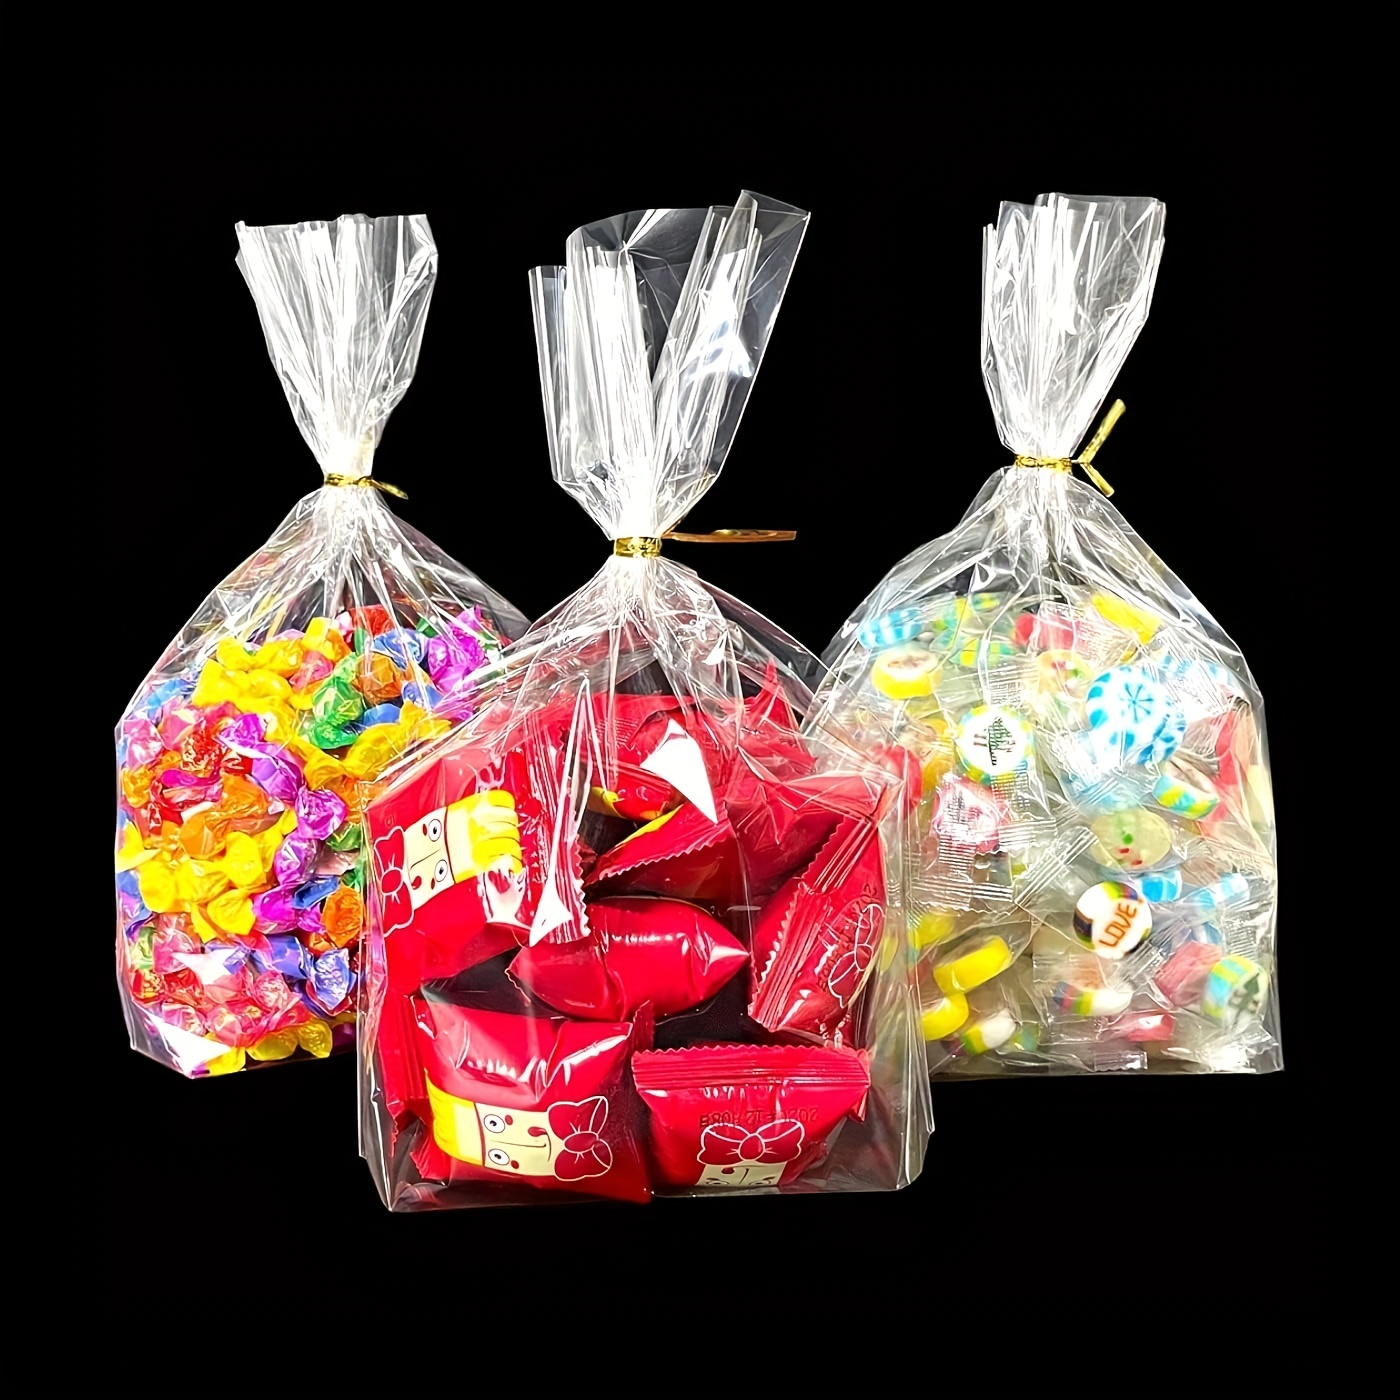 Bolsas transparentes para golosinas, 100 bolsas de celofán, bolsas  transparentes para dulces con 100 lazos metálicos para niños, cumpleaños,  dulces